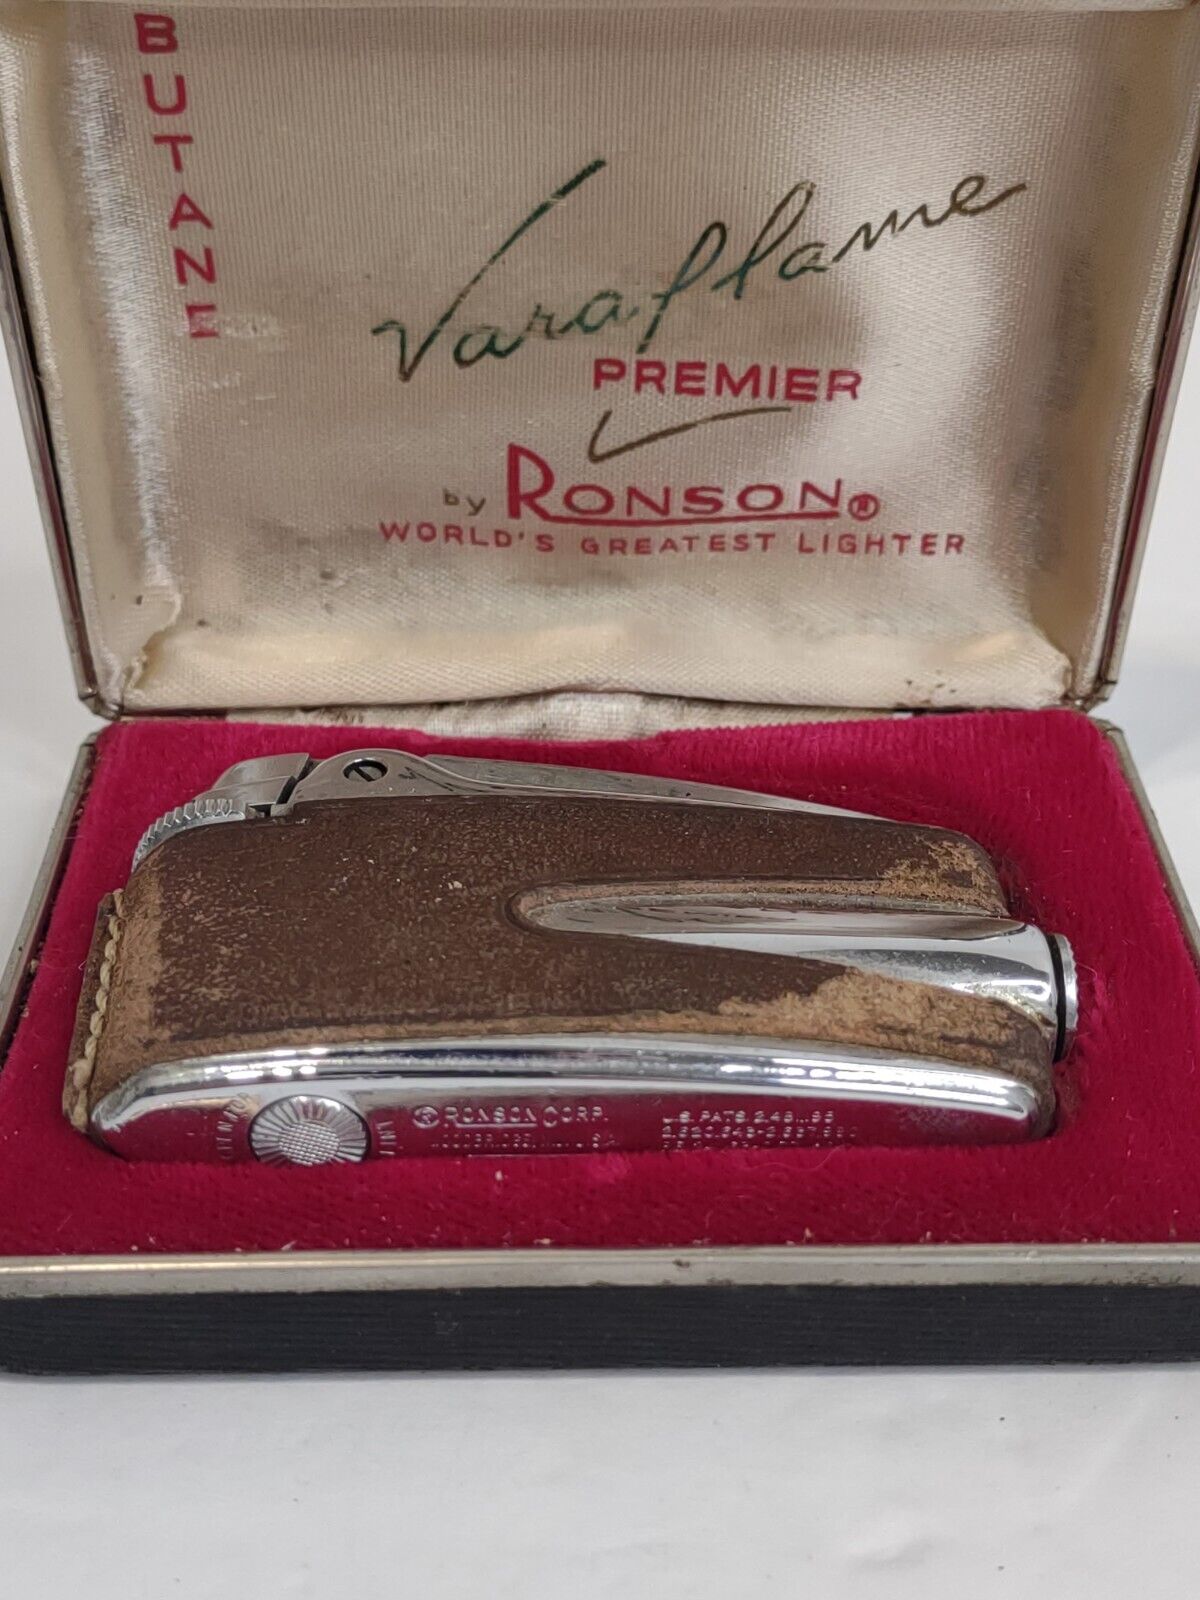 Leather Ronson Varaflame Premier Lighter Silver Tone Vintage NJ USA